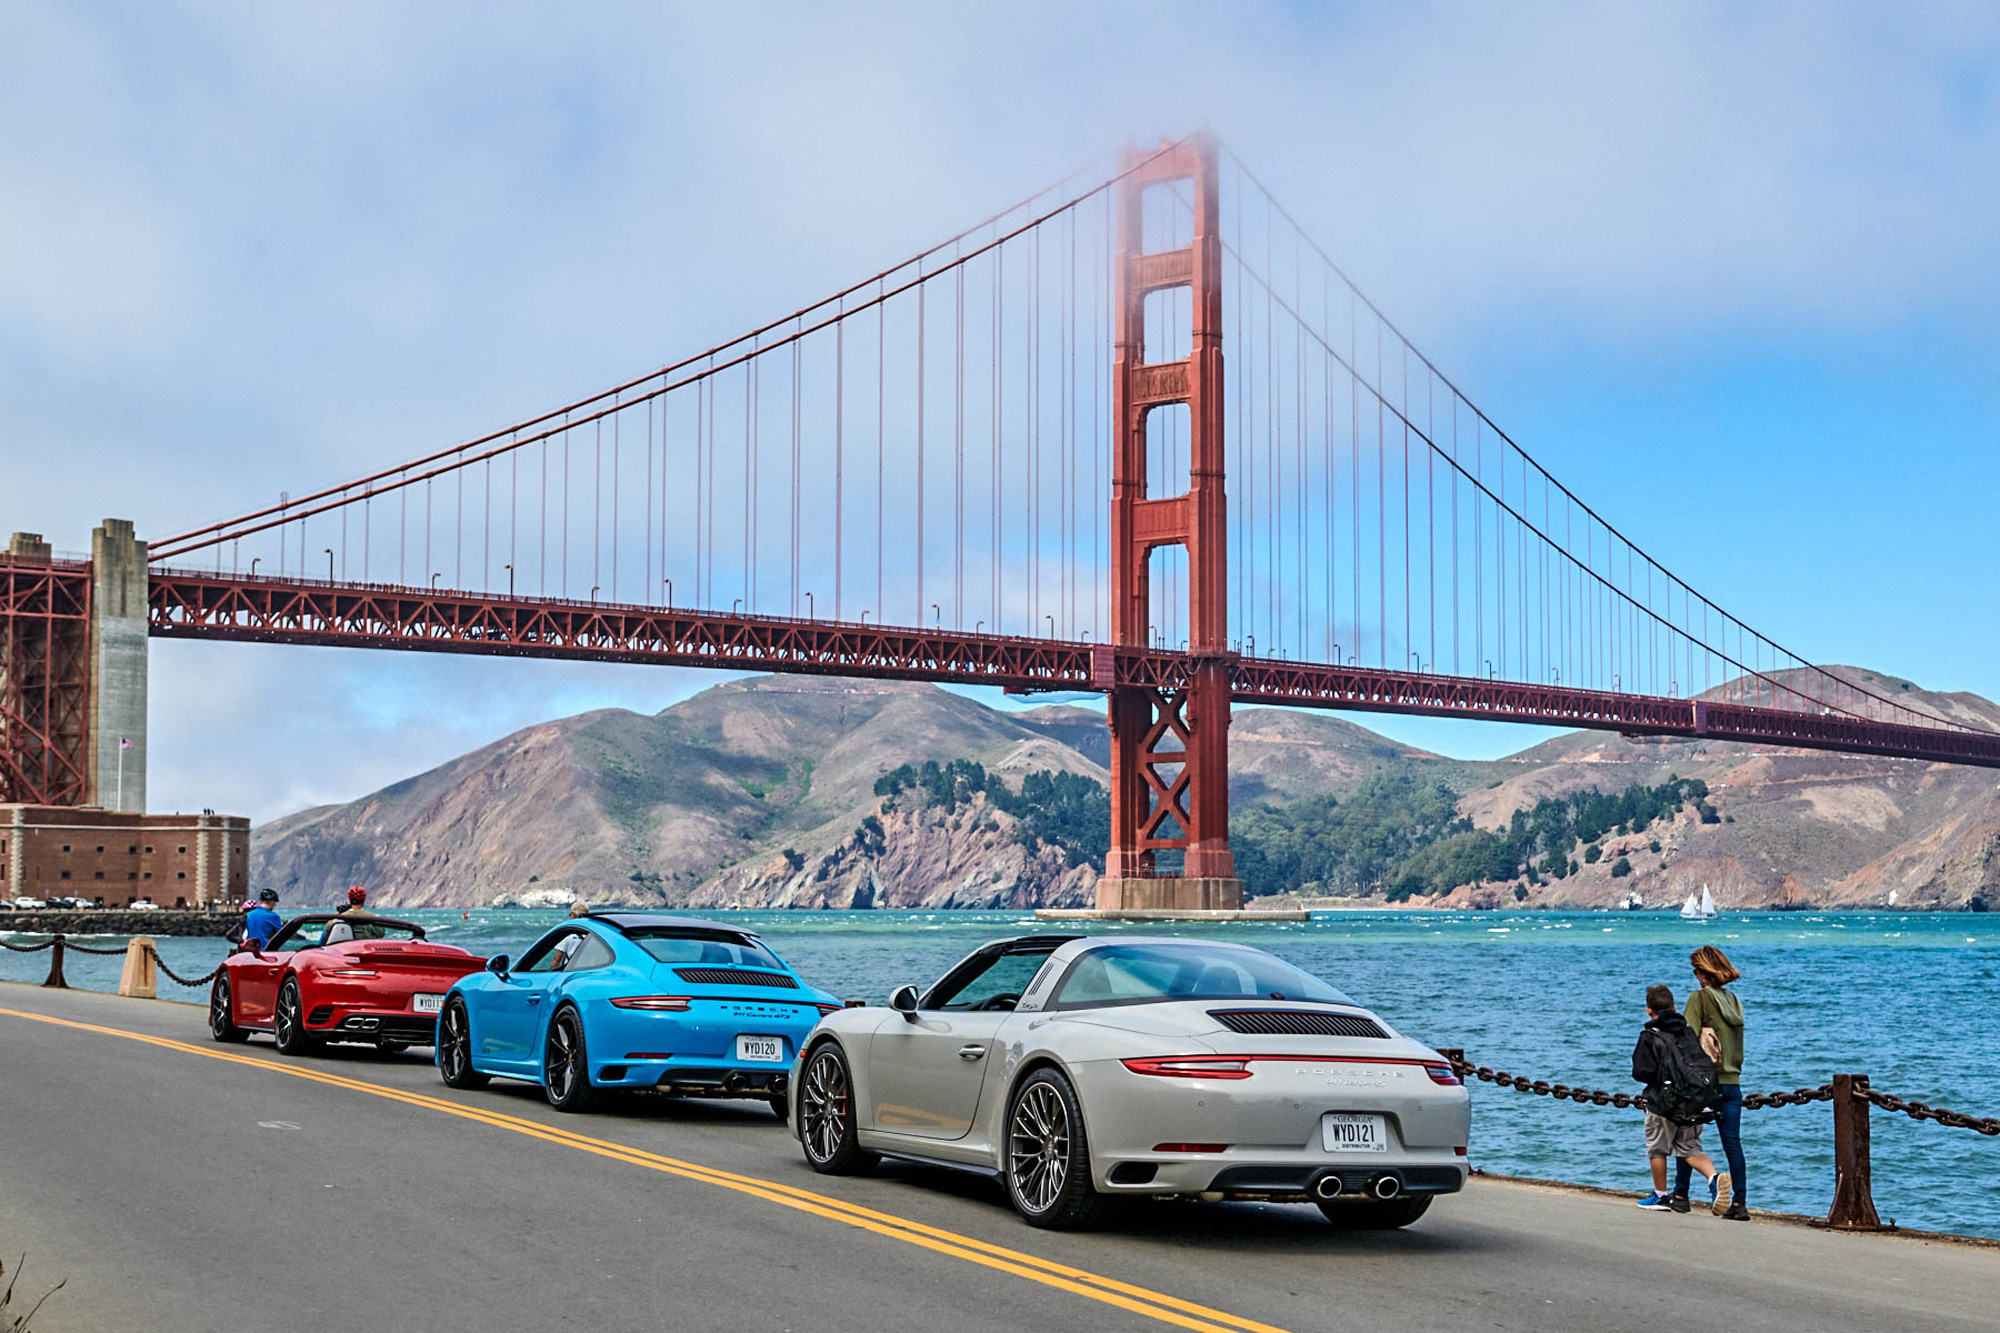 Porsche vehicles approaching the Golden Gate Bridge in San Francisco